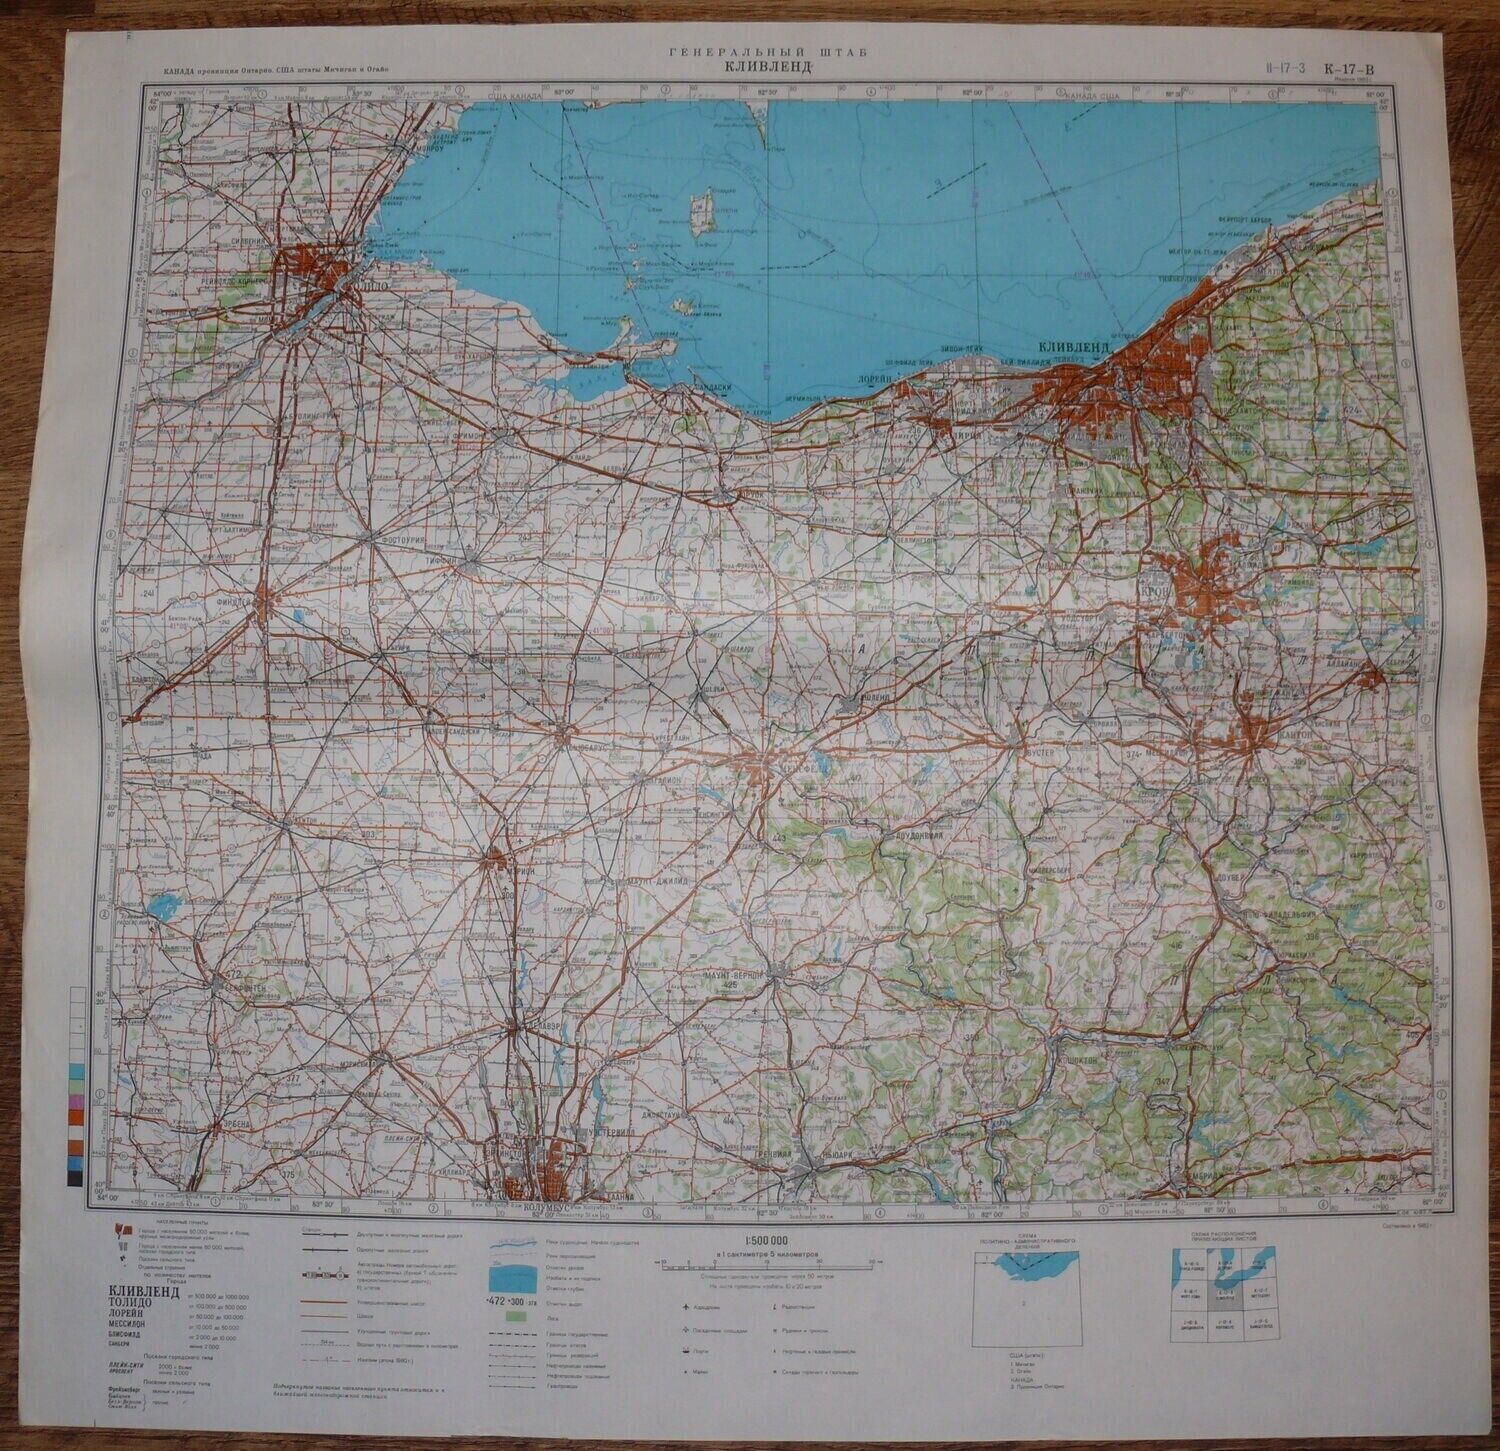 Authentic Soviet Army Secret Military Topographic Map Cleveland, OHIO, USA